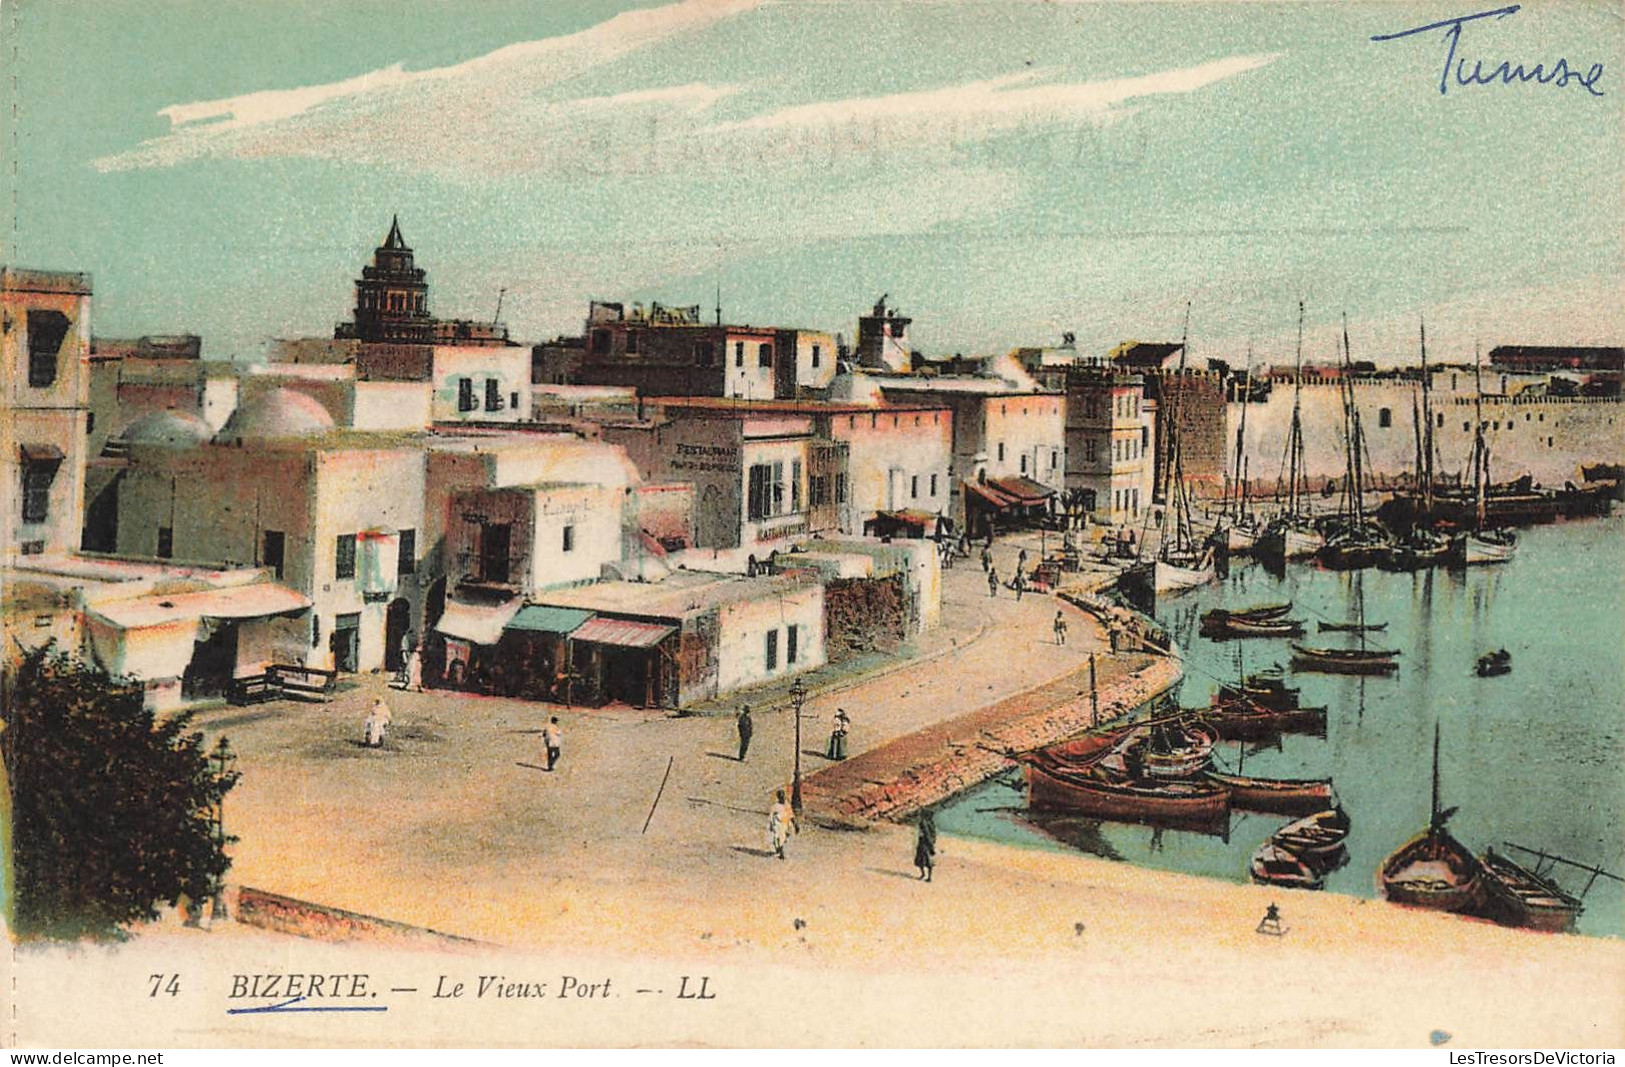 TUNISIE - Bizerte - Le Vieux Port - Carte Postale Ancienne - Tunisie